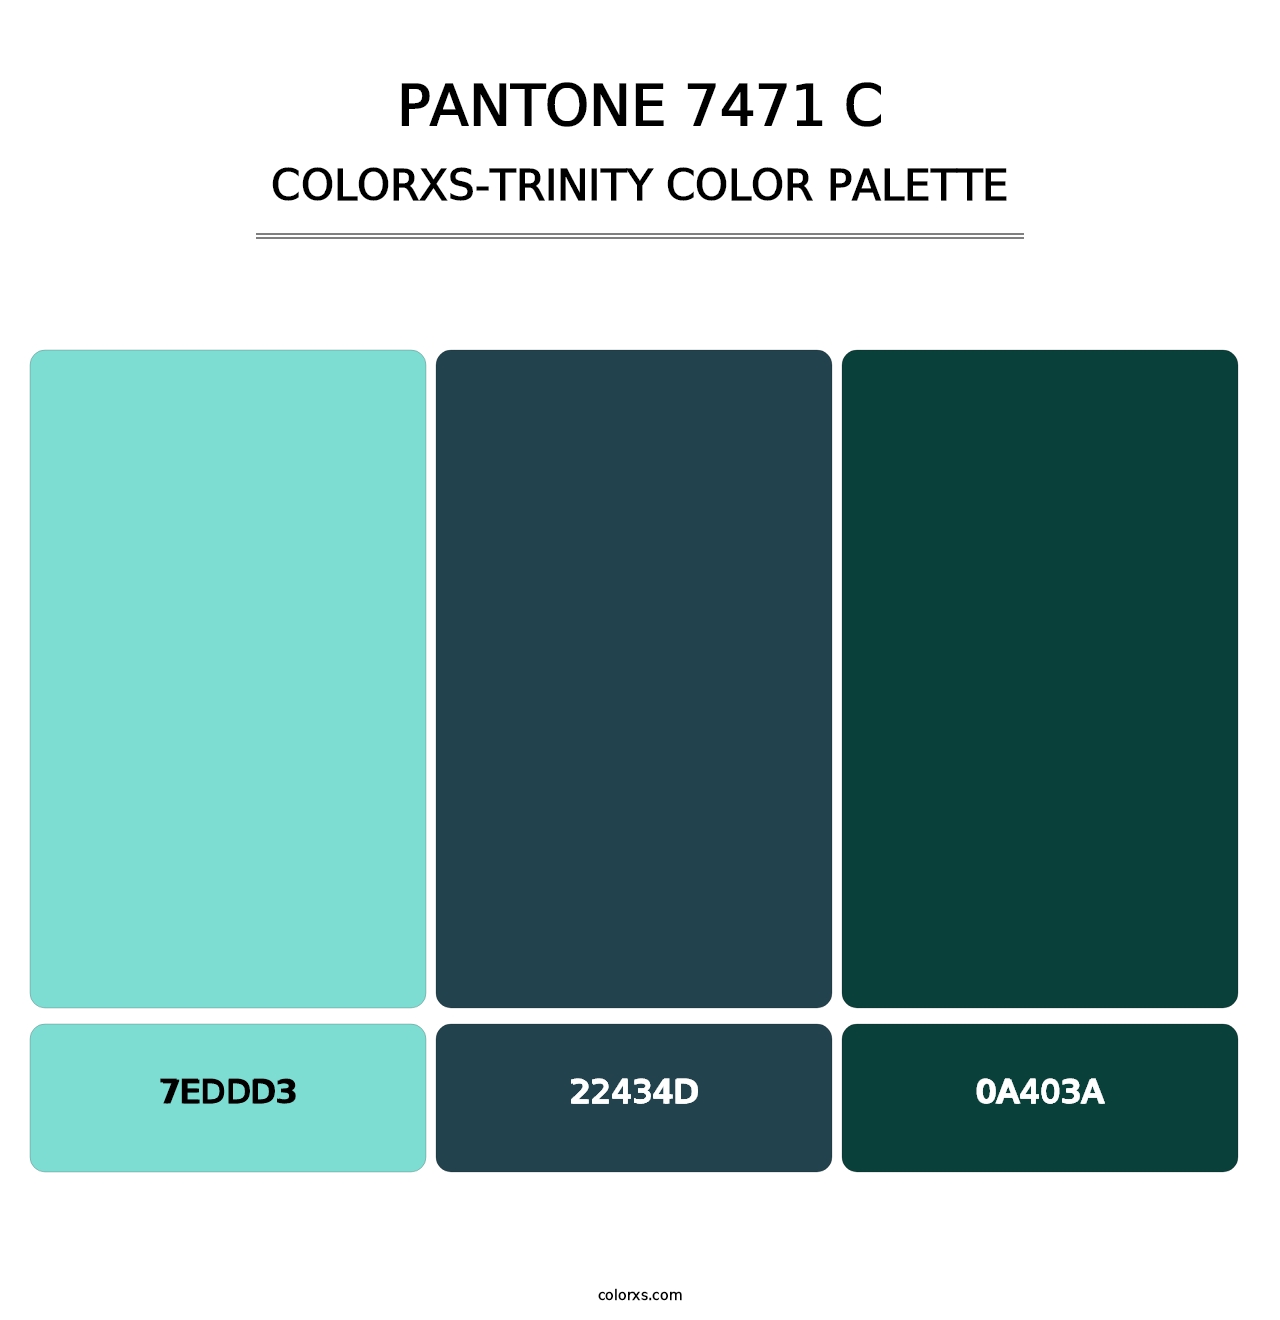 PANTONE 7471 C - Colorxs Trinity Palette